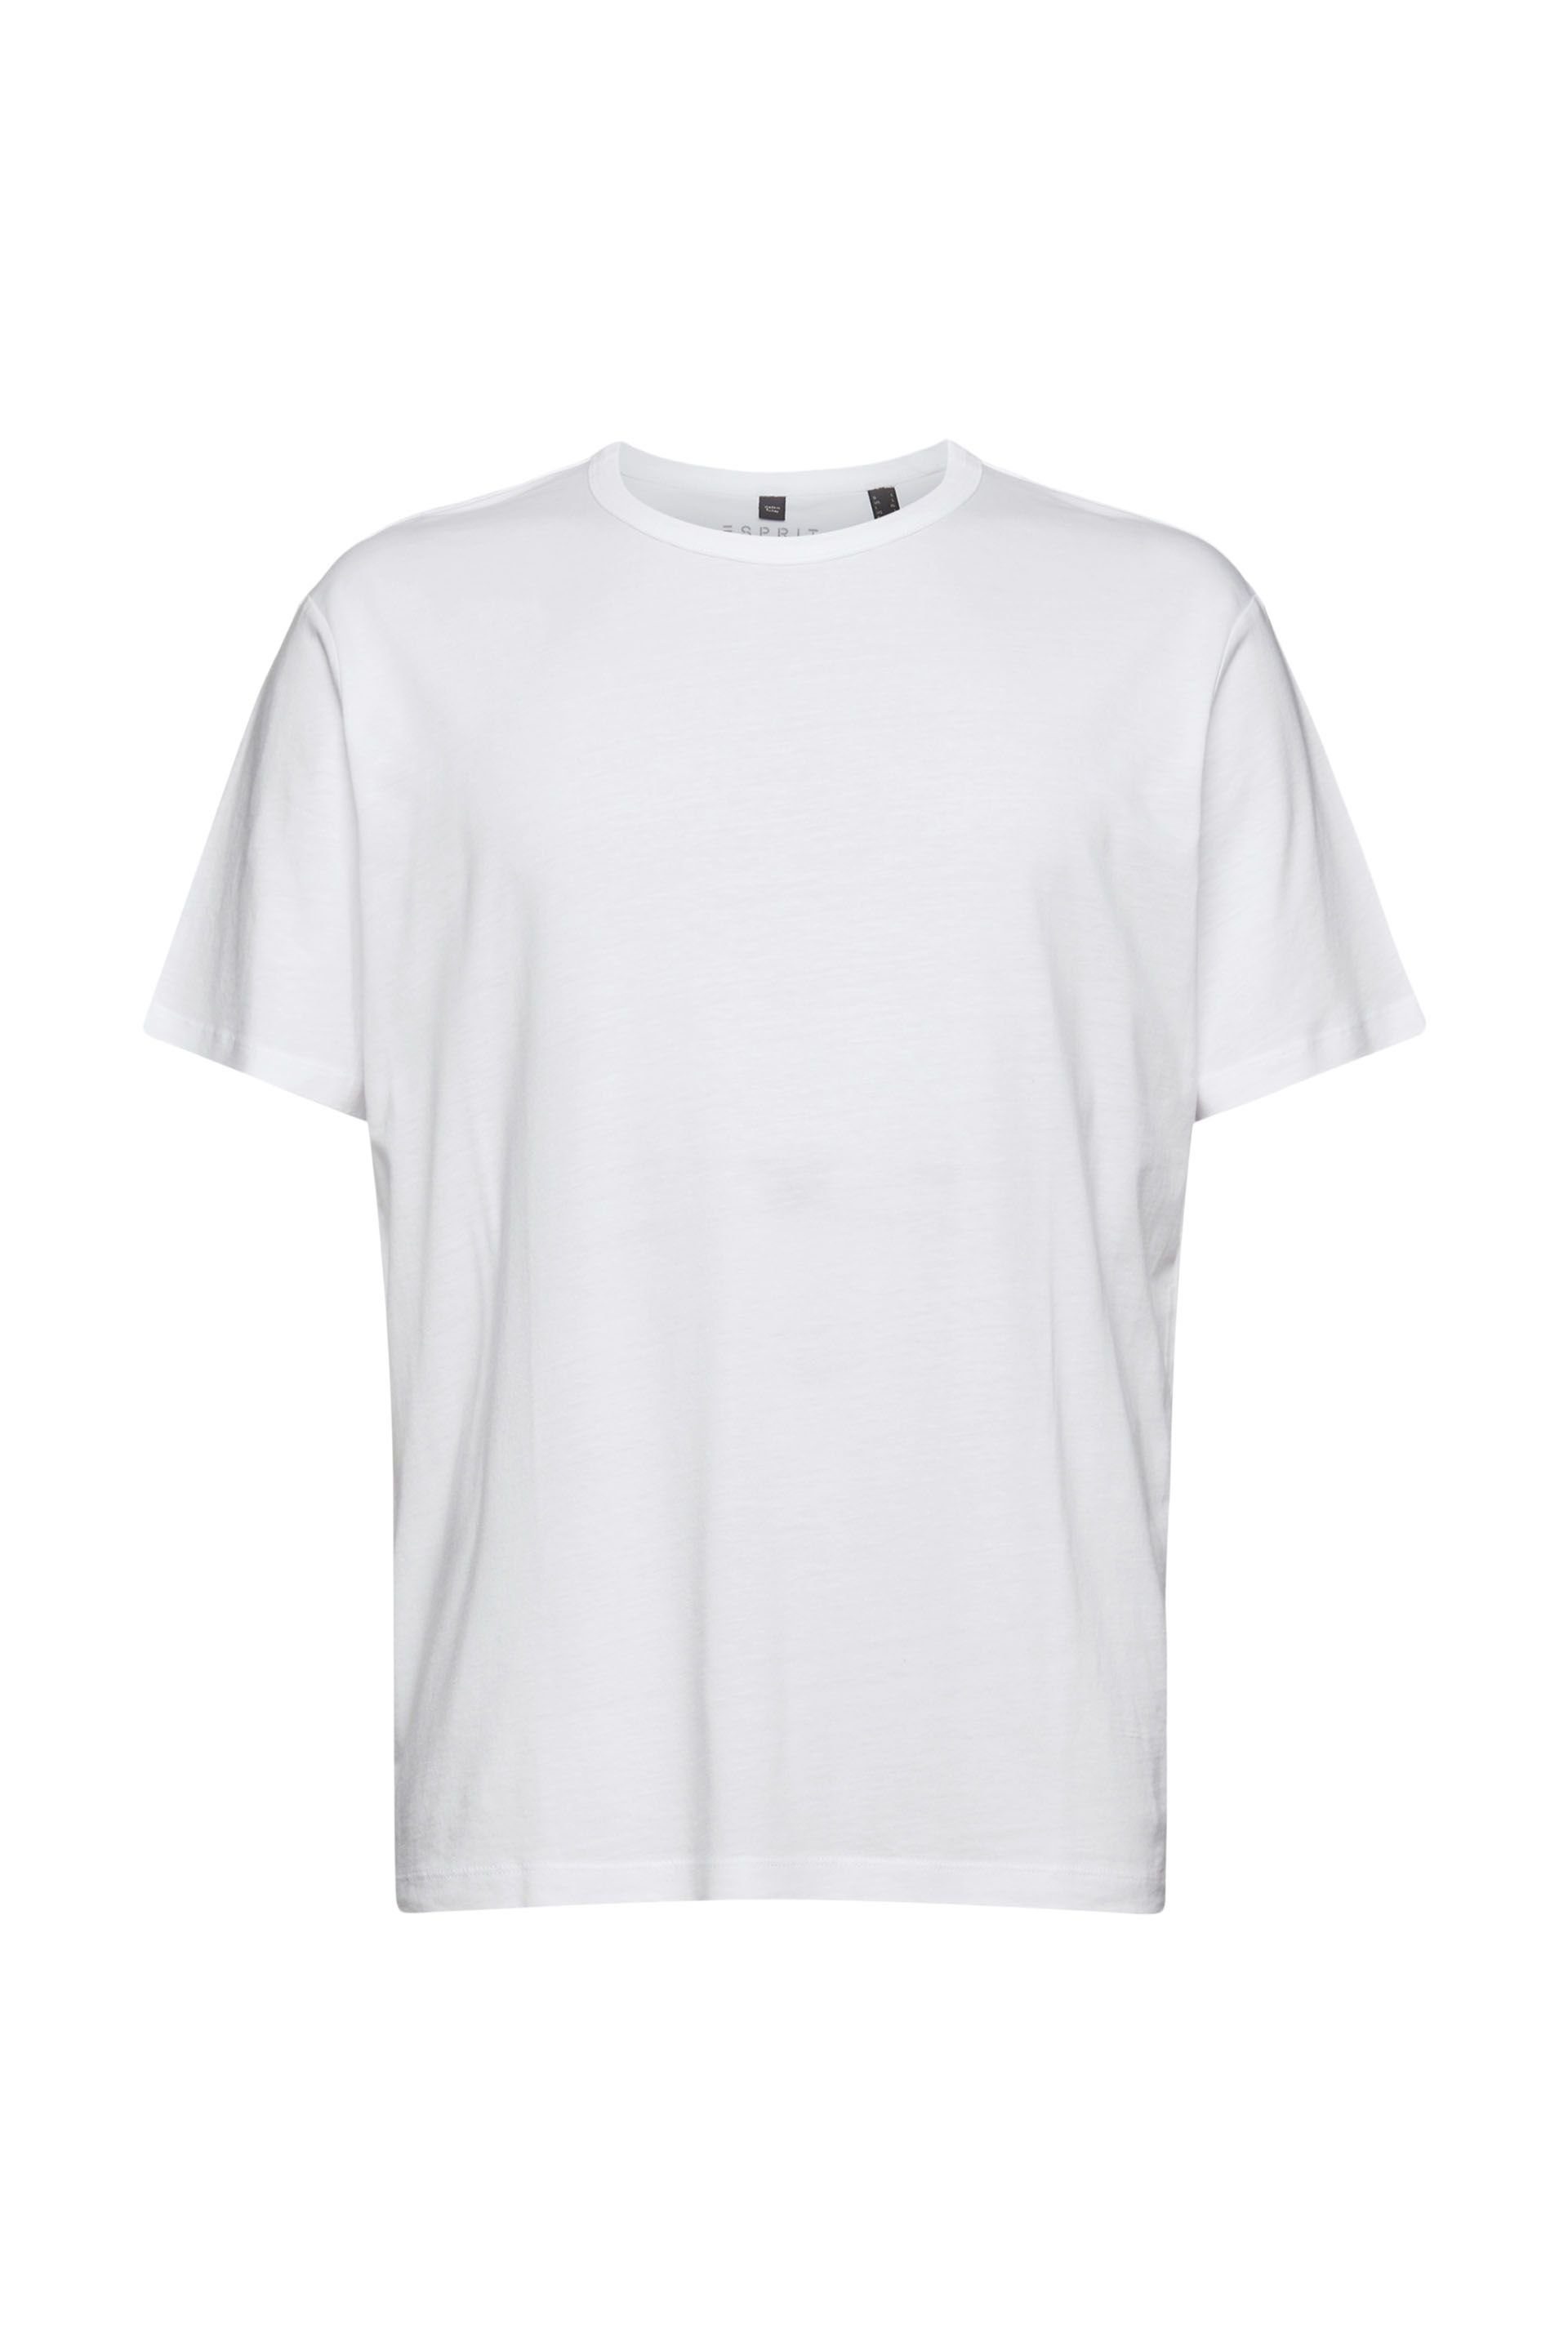 Esprit T-Shirt white | T-Shirts